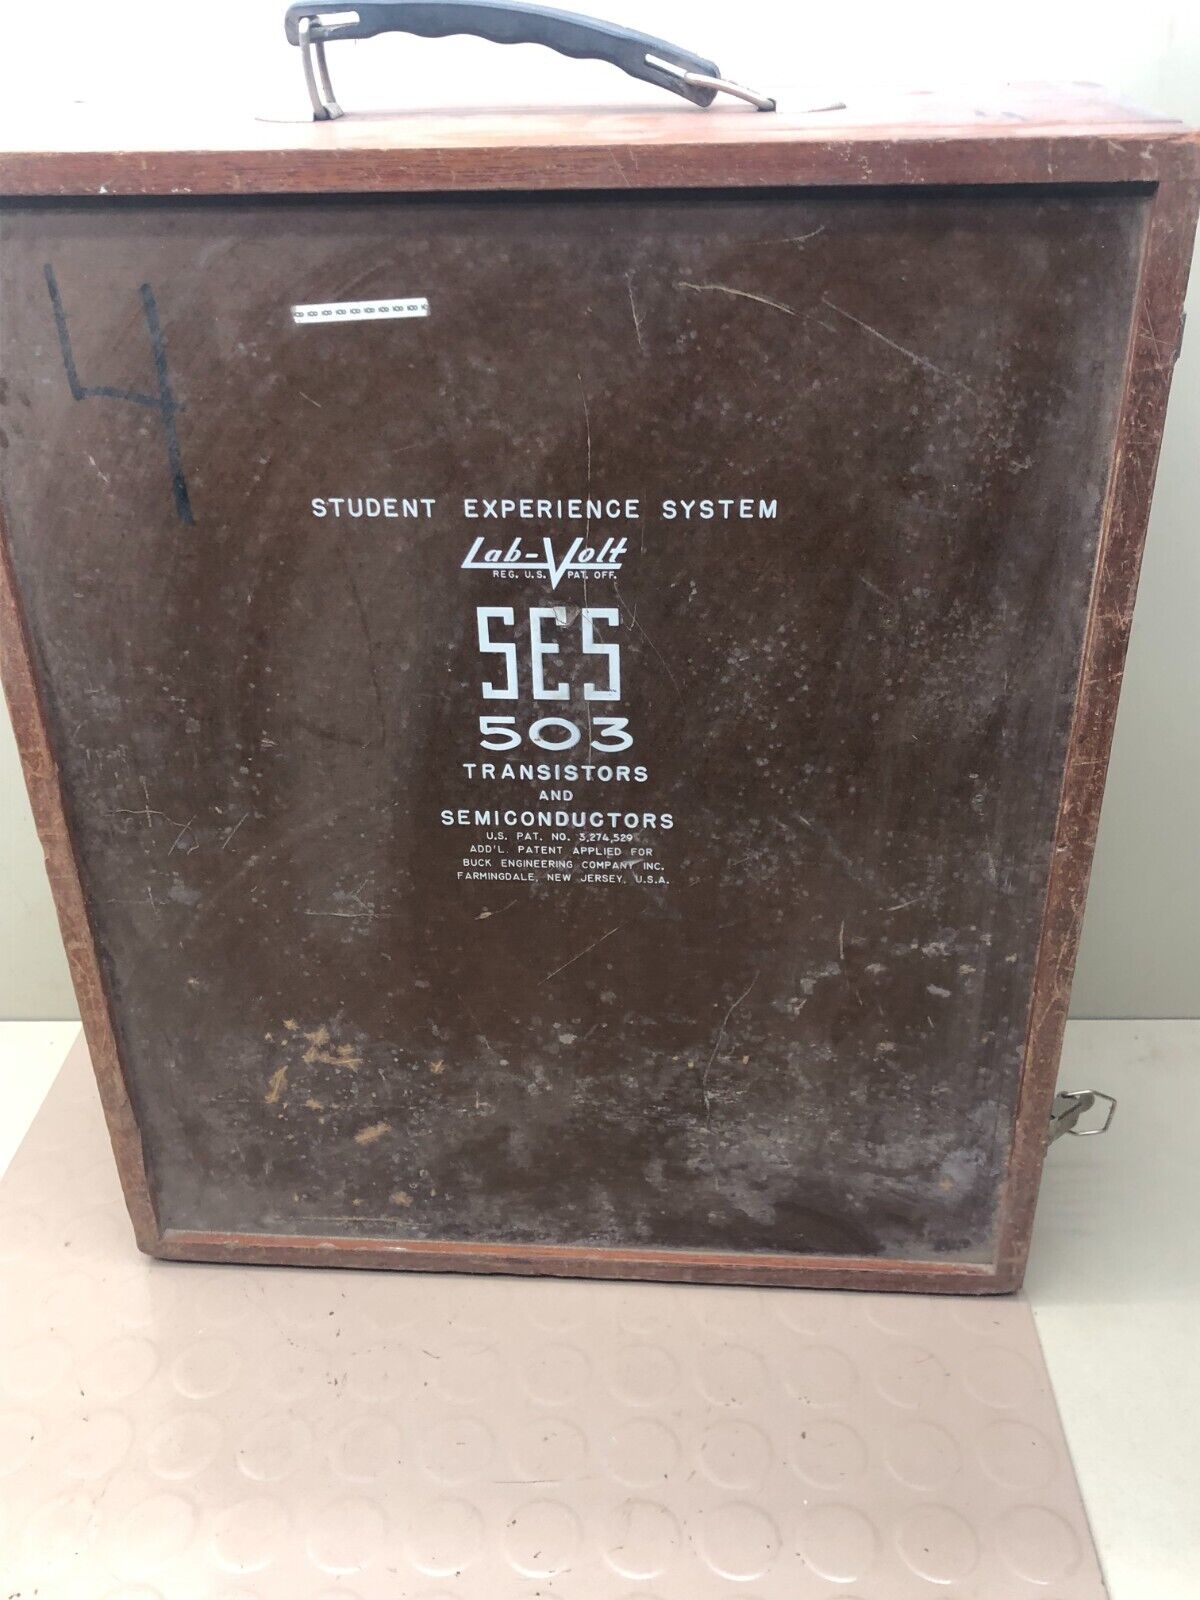 Vintage Lab-Volt SES 503 Student Experience System Transistors Semiconductors